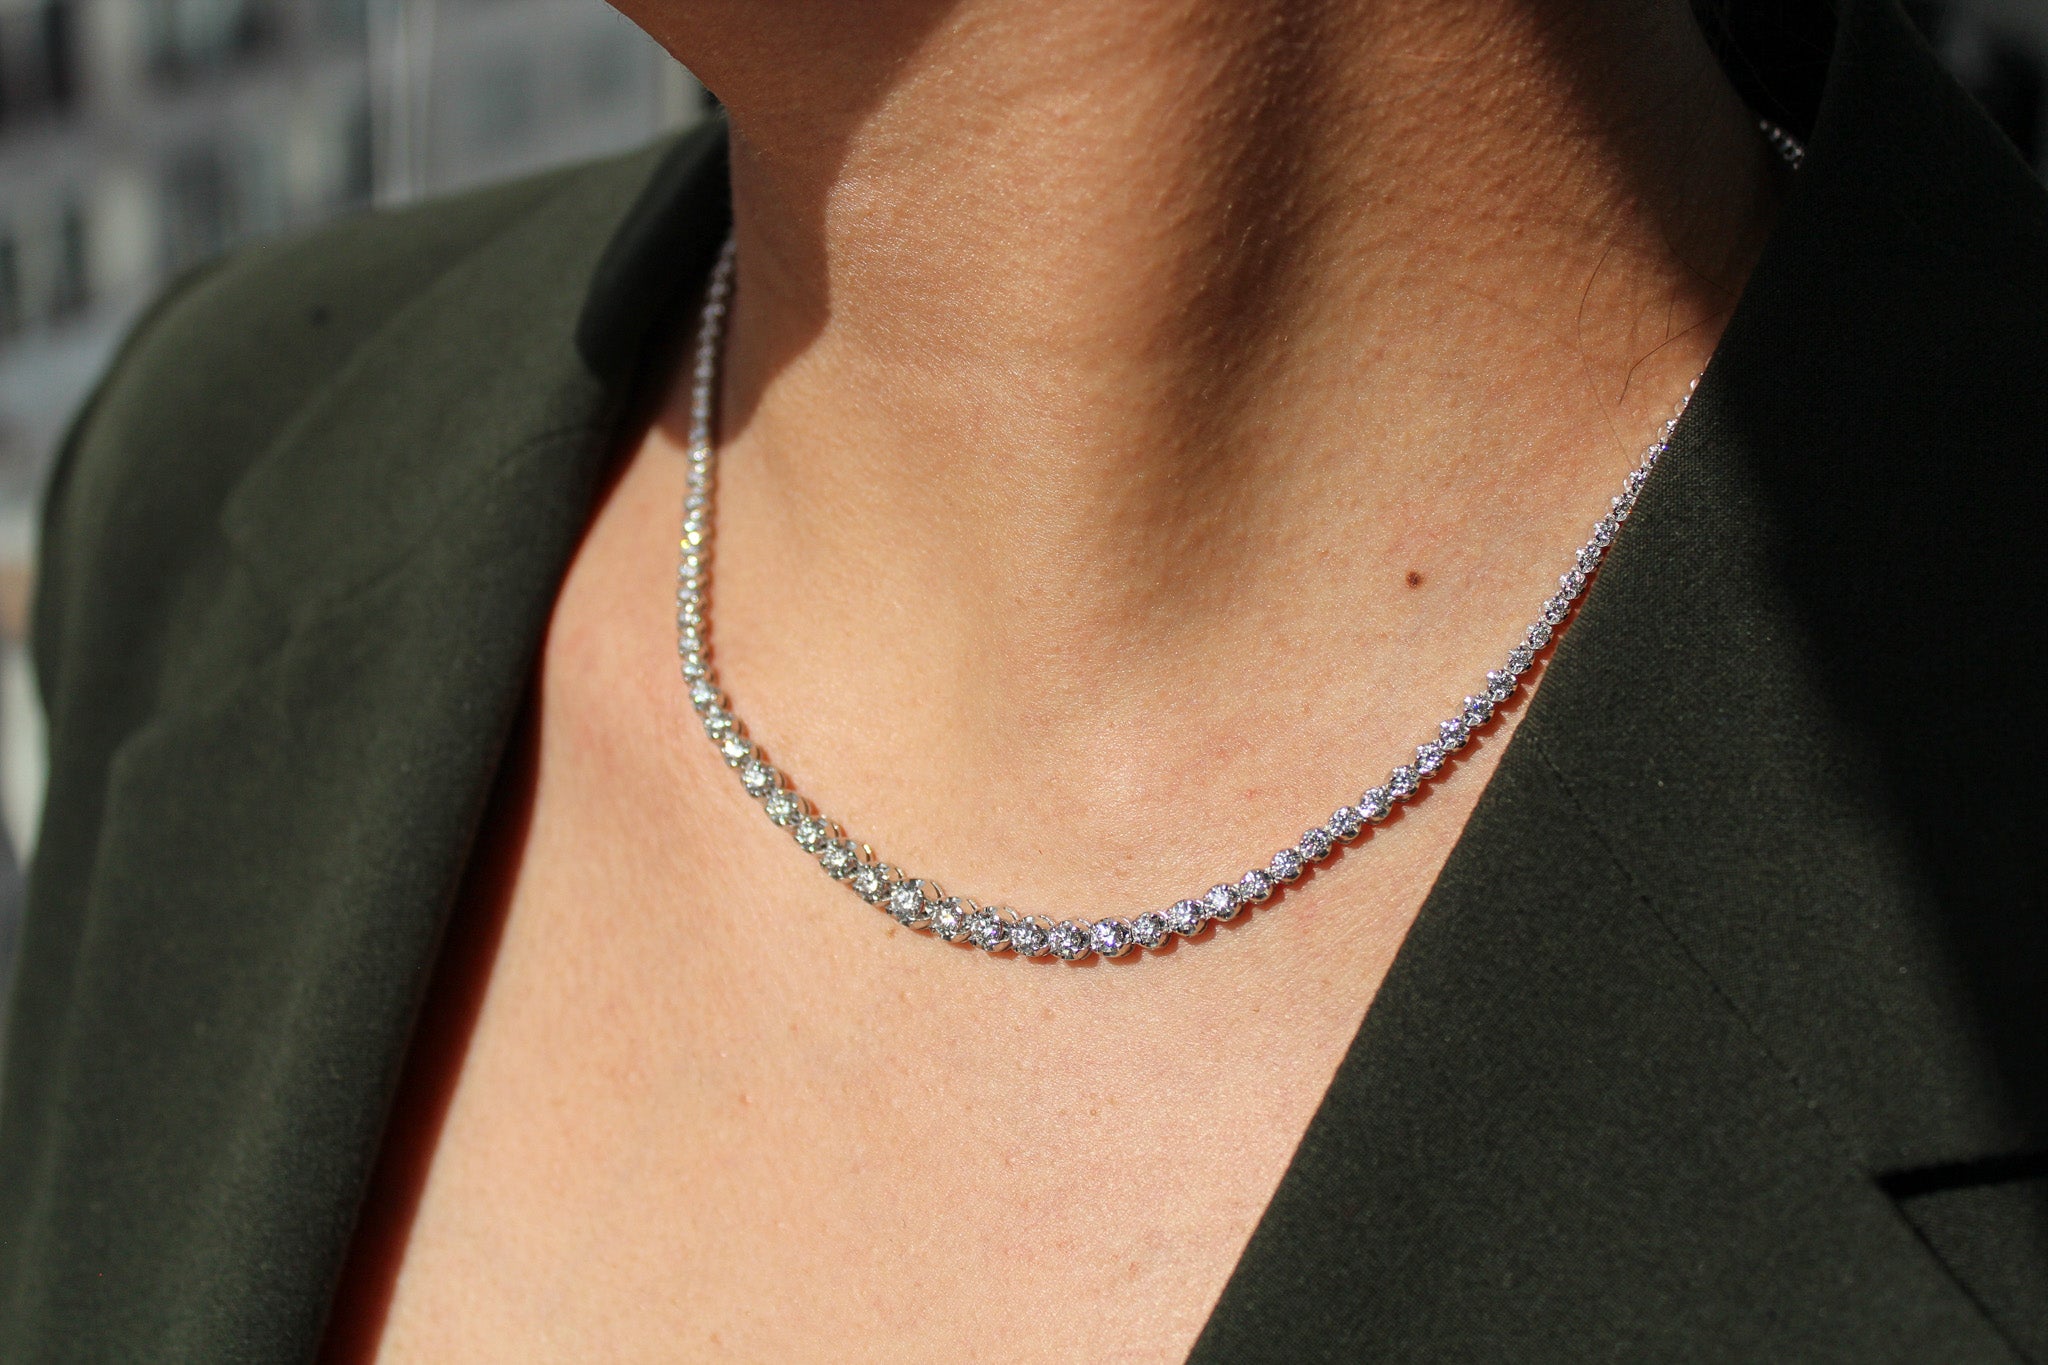 Natural Round Cut Diamond  14k Gold Graduated Riviera Fashion Necklace - Sabrina A Jewelry